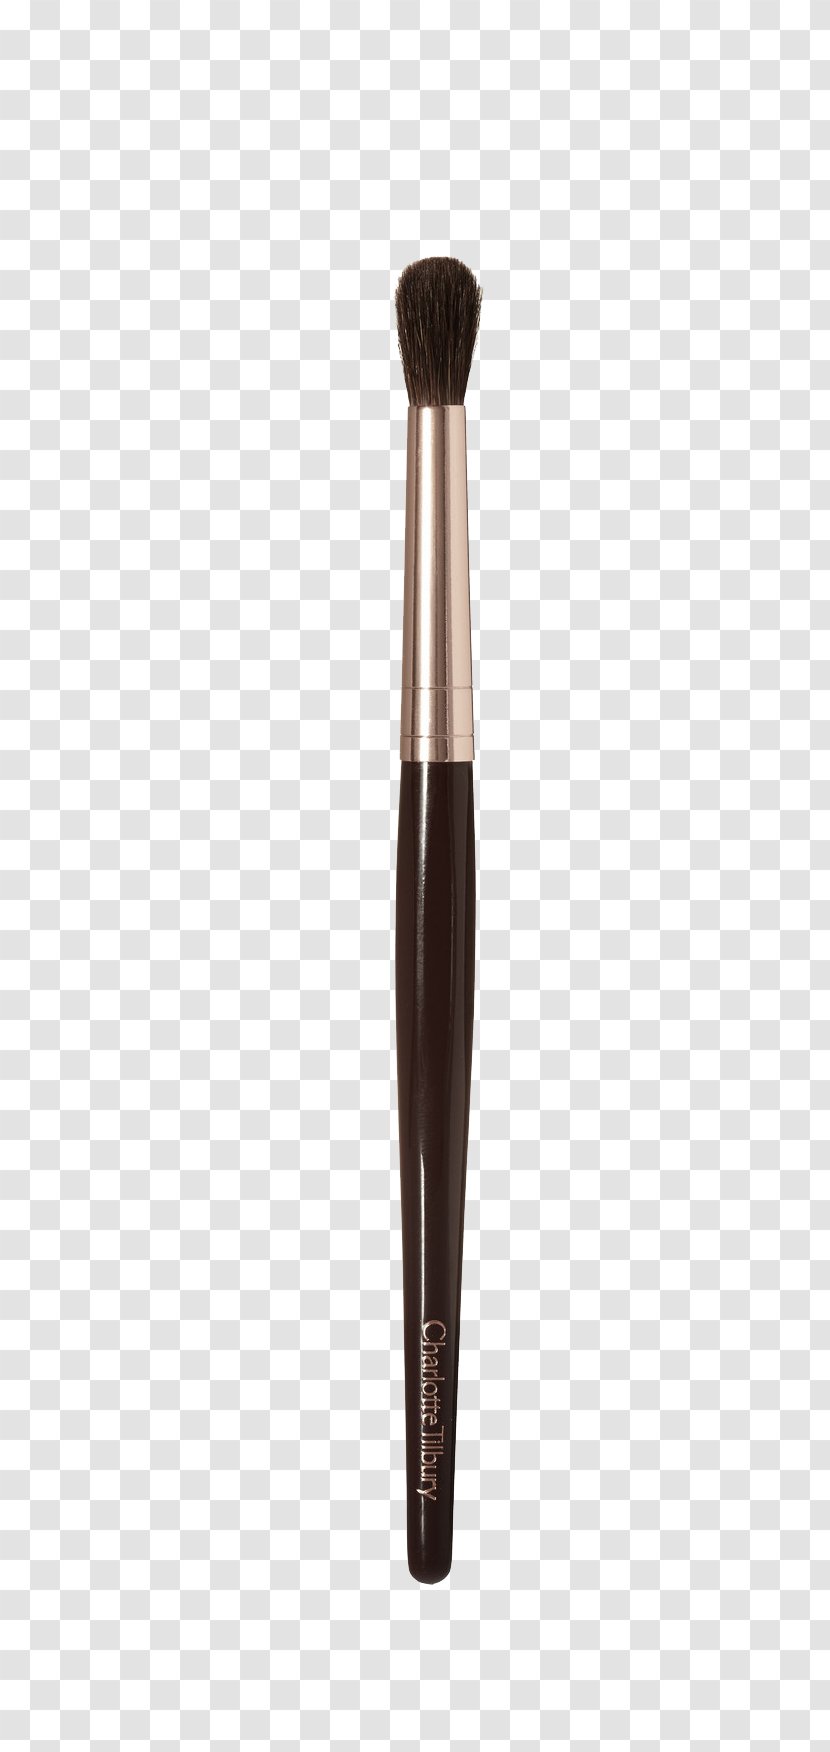 Brush - Black Cosmetic Pencil Head Transparent PNG